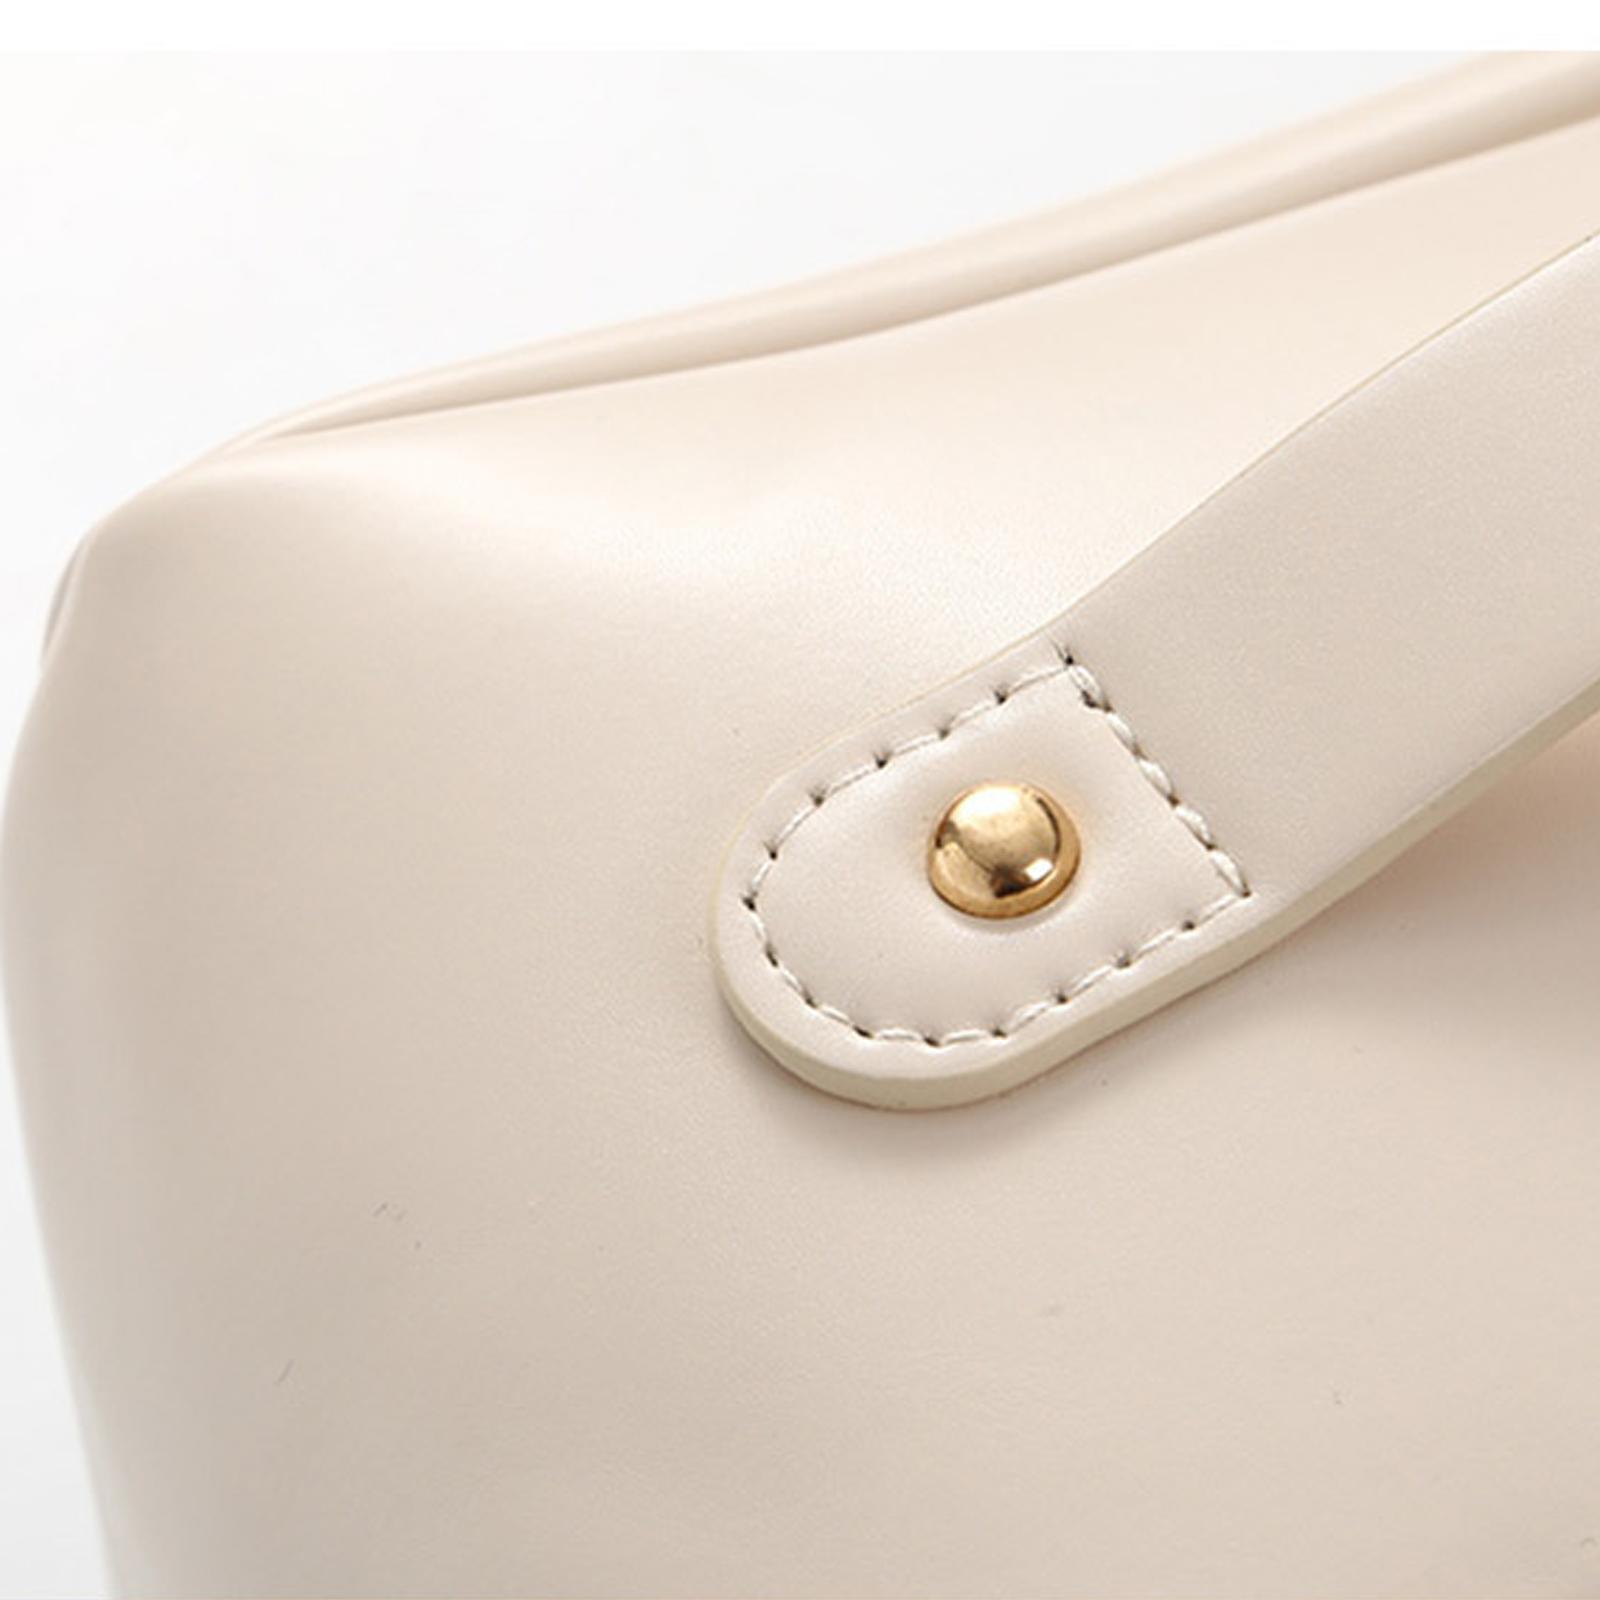 Portable Travel Toiletry Bag PU Leather Handbag Waterproof Women Girls white